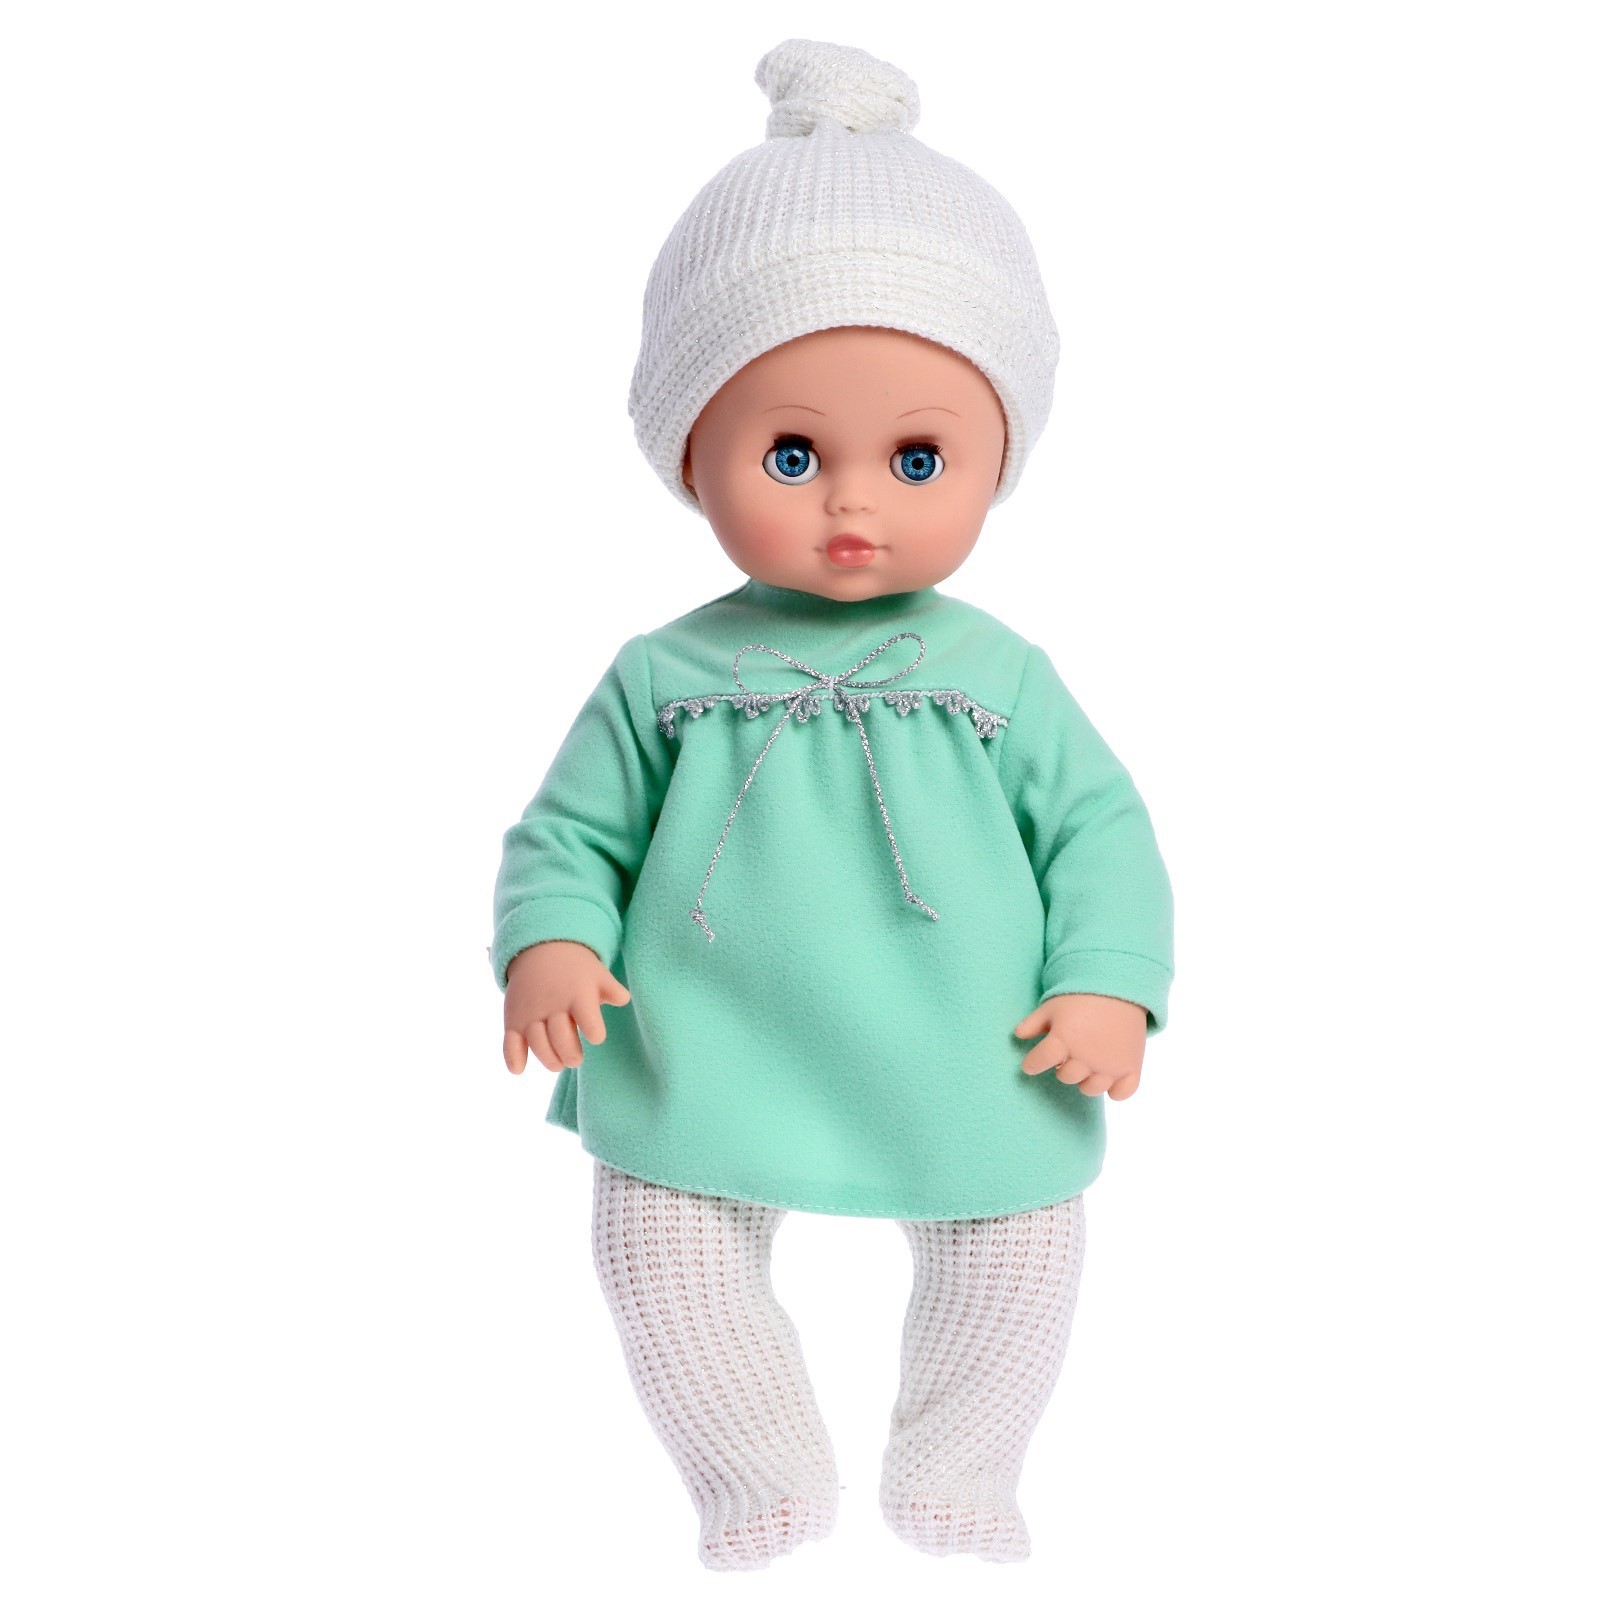 Кукла Актамир Лиза 8 озвученная, 40 см кукла лиза 6